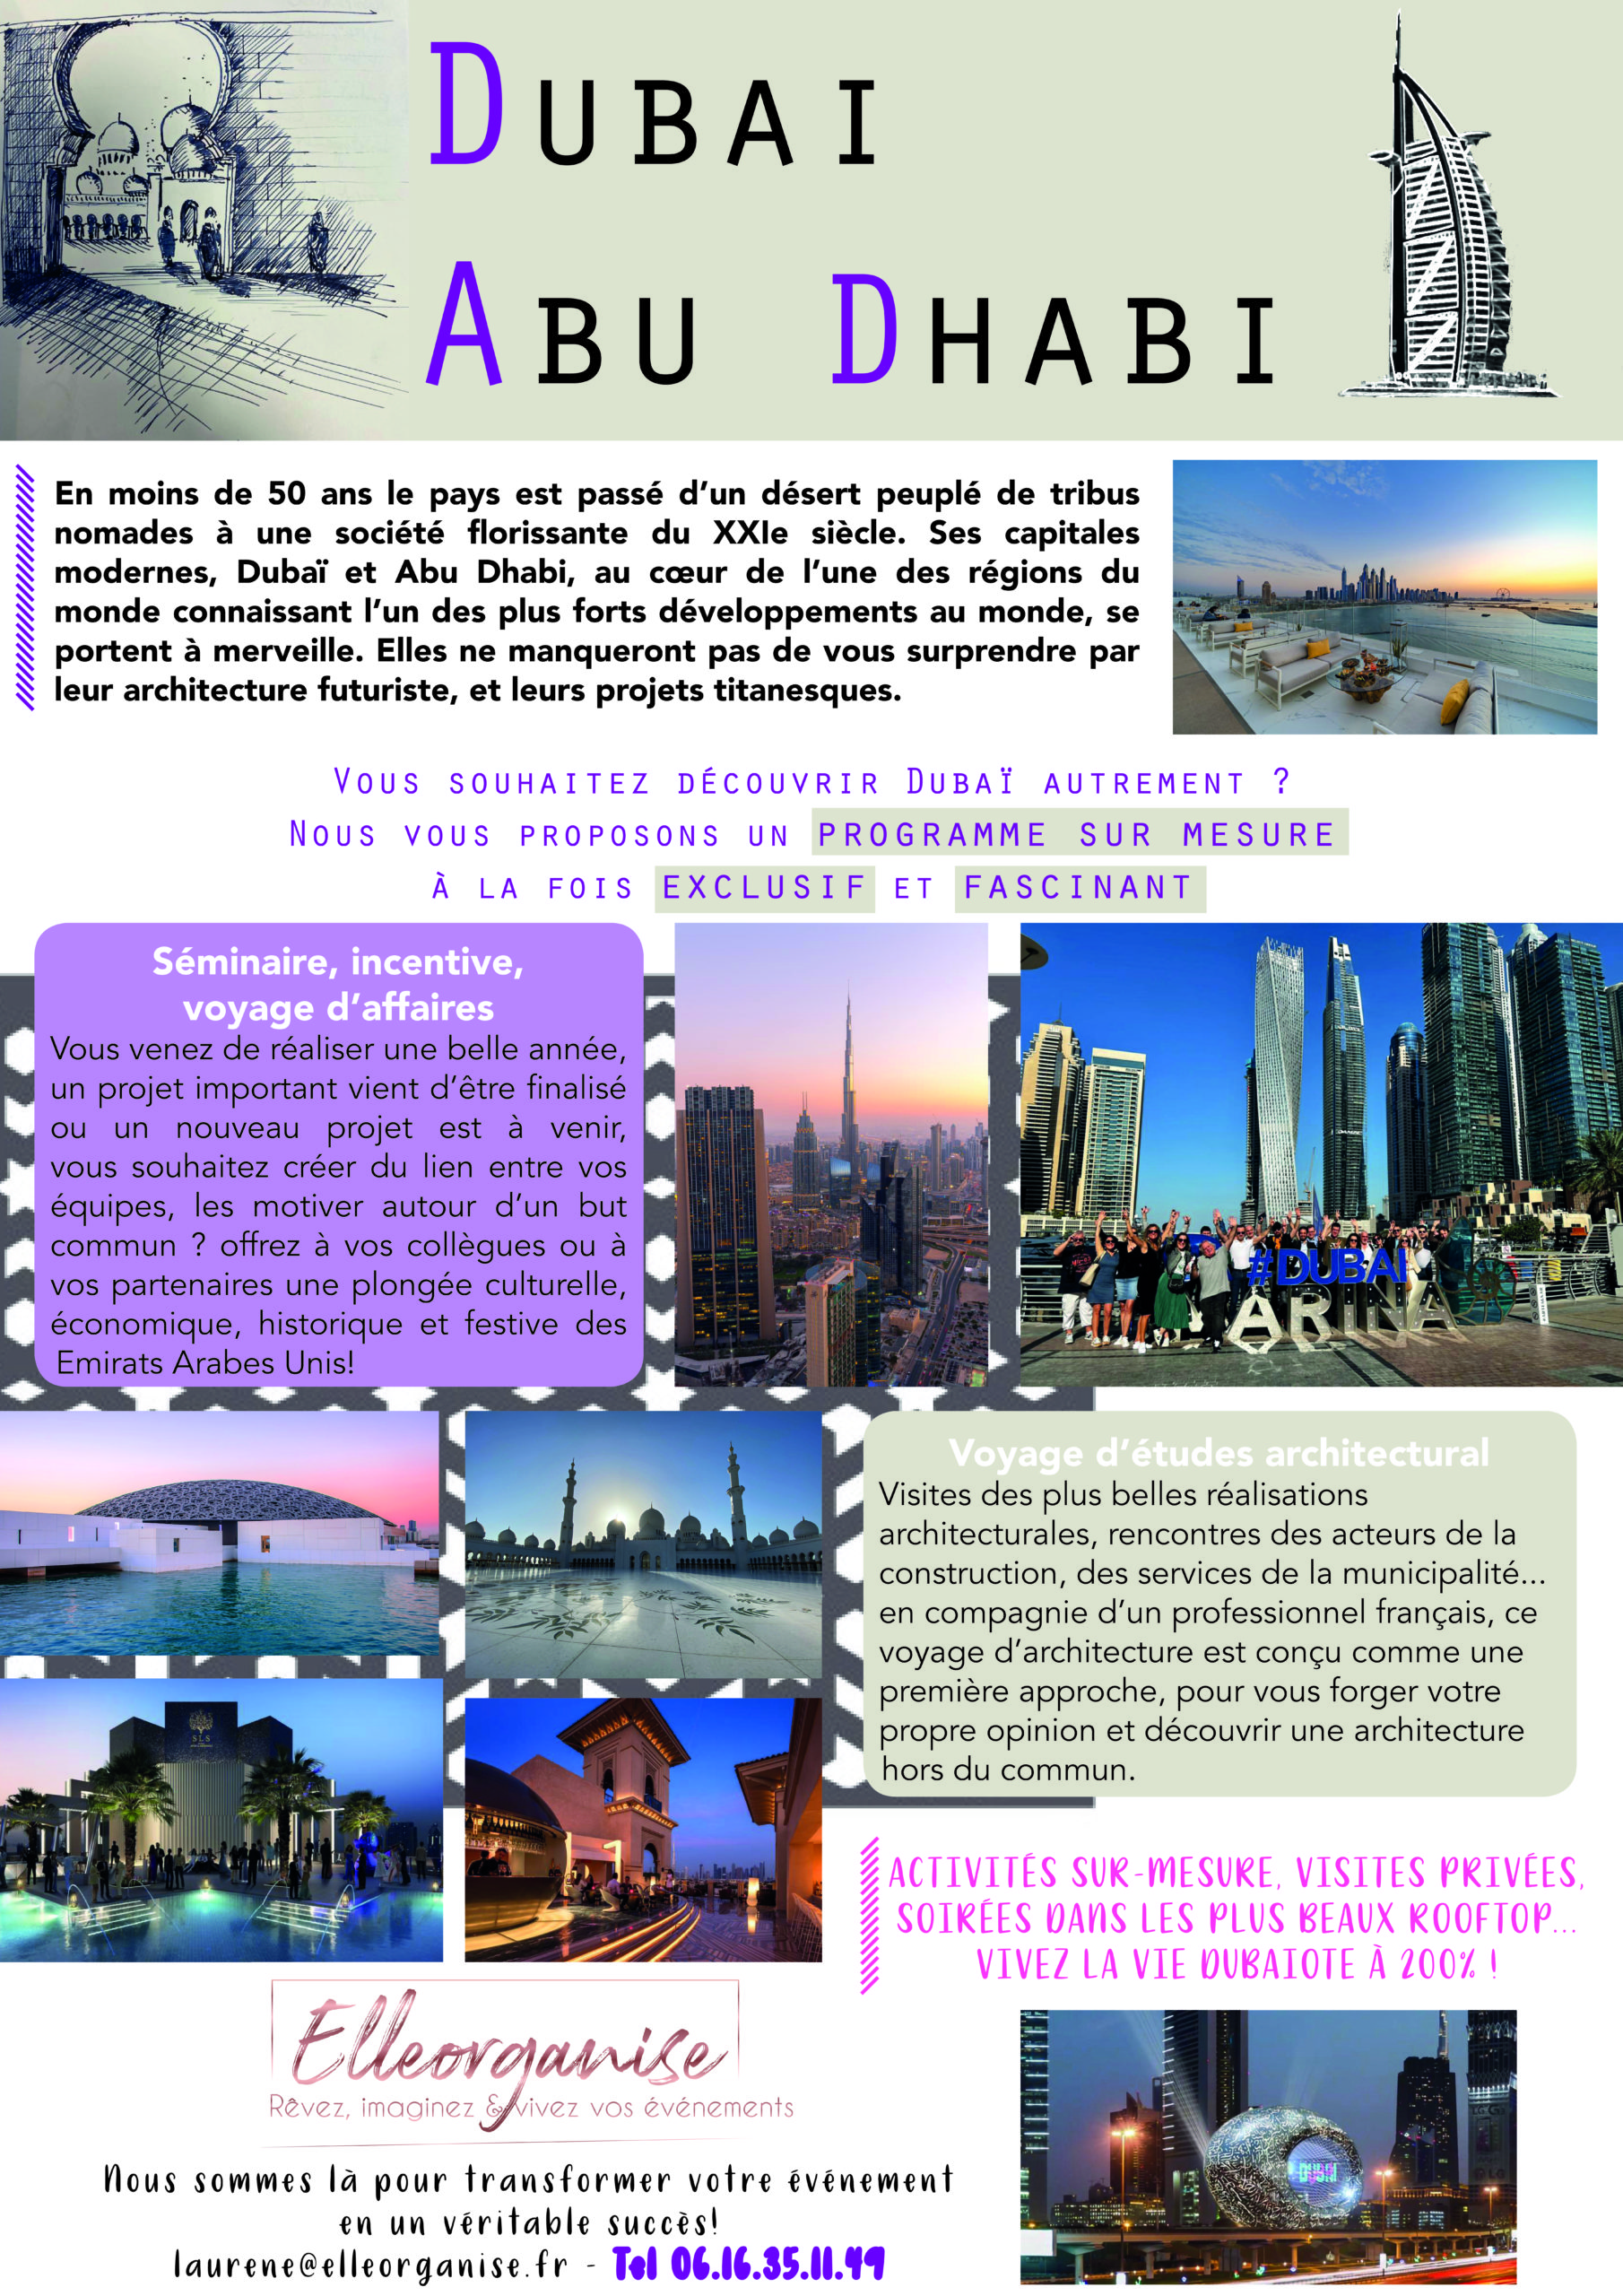 DUBAI abu dhabi organisation séminaire voyage incentive equipe soirée